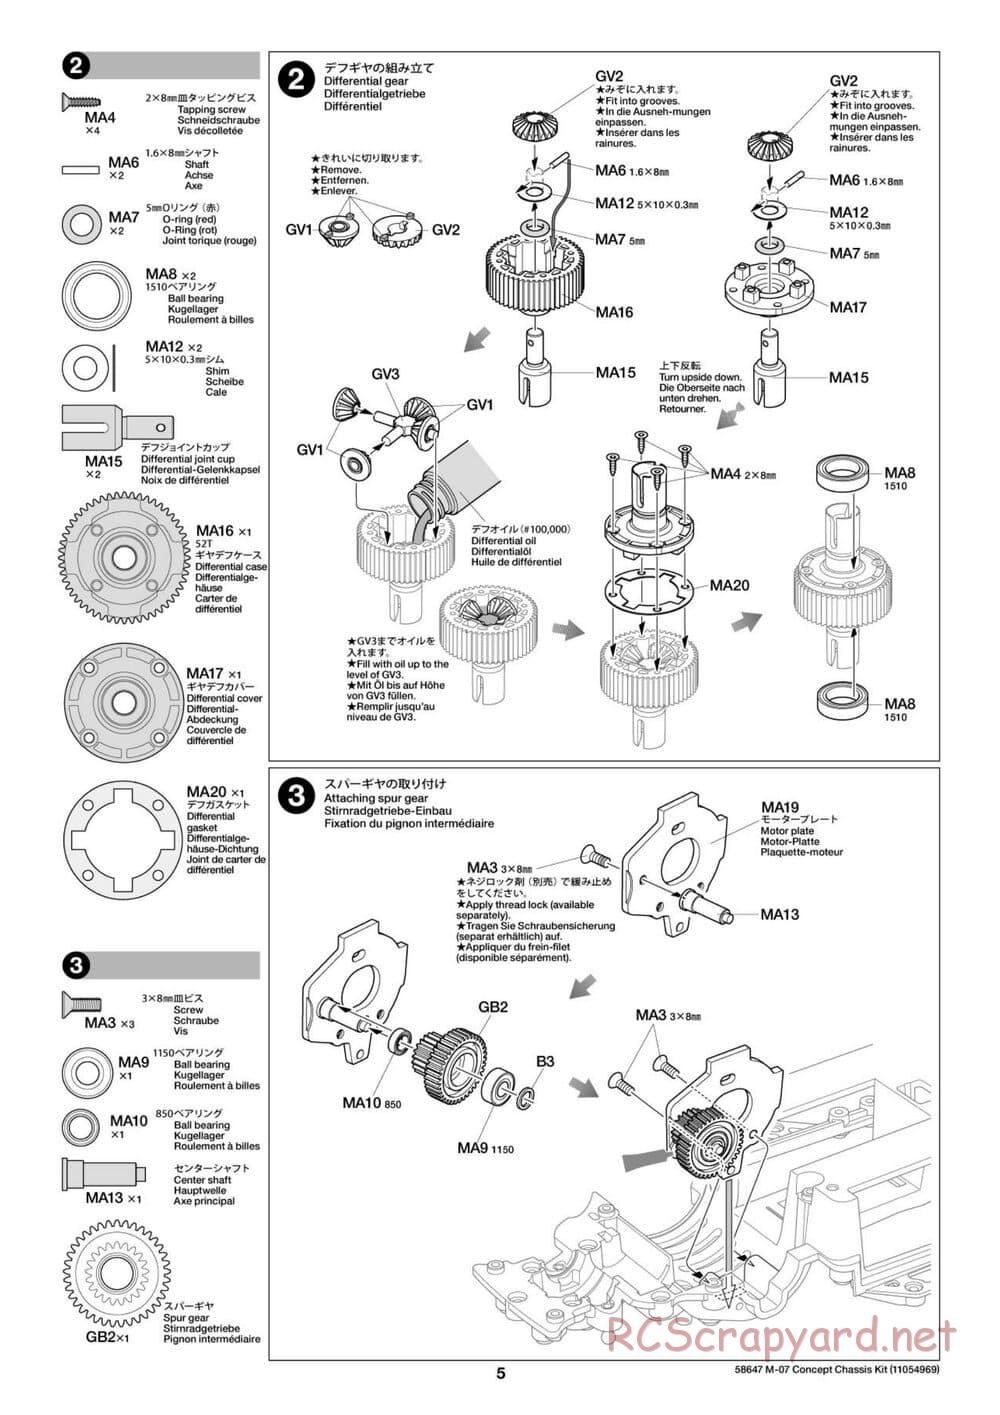 Tamiya - M-07 Concept Chassis - Manual - Page 5